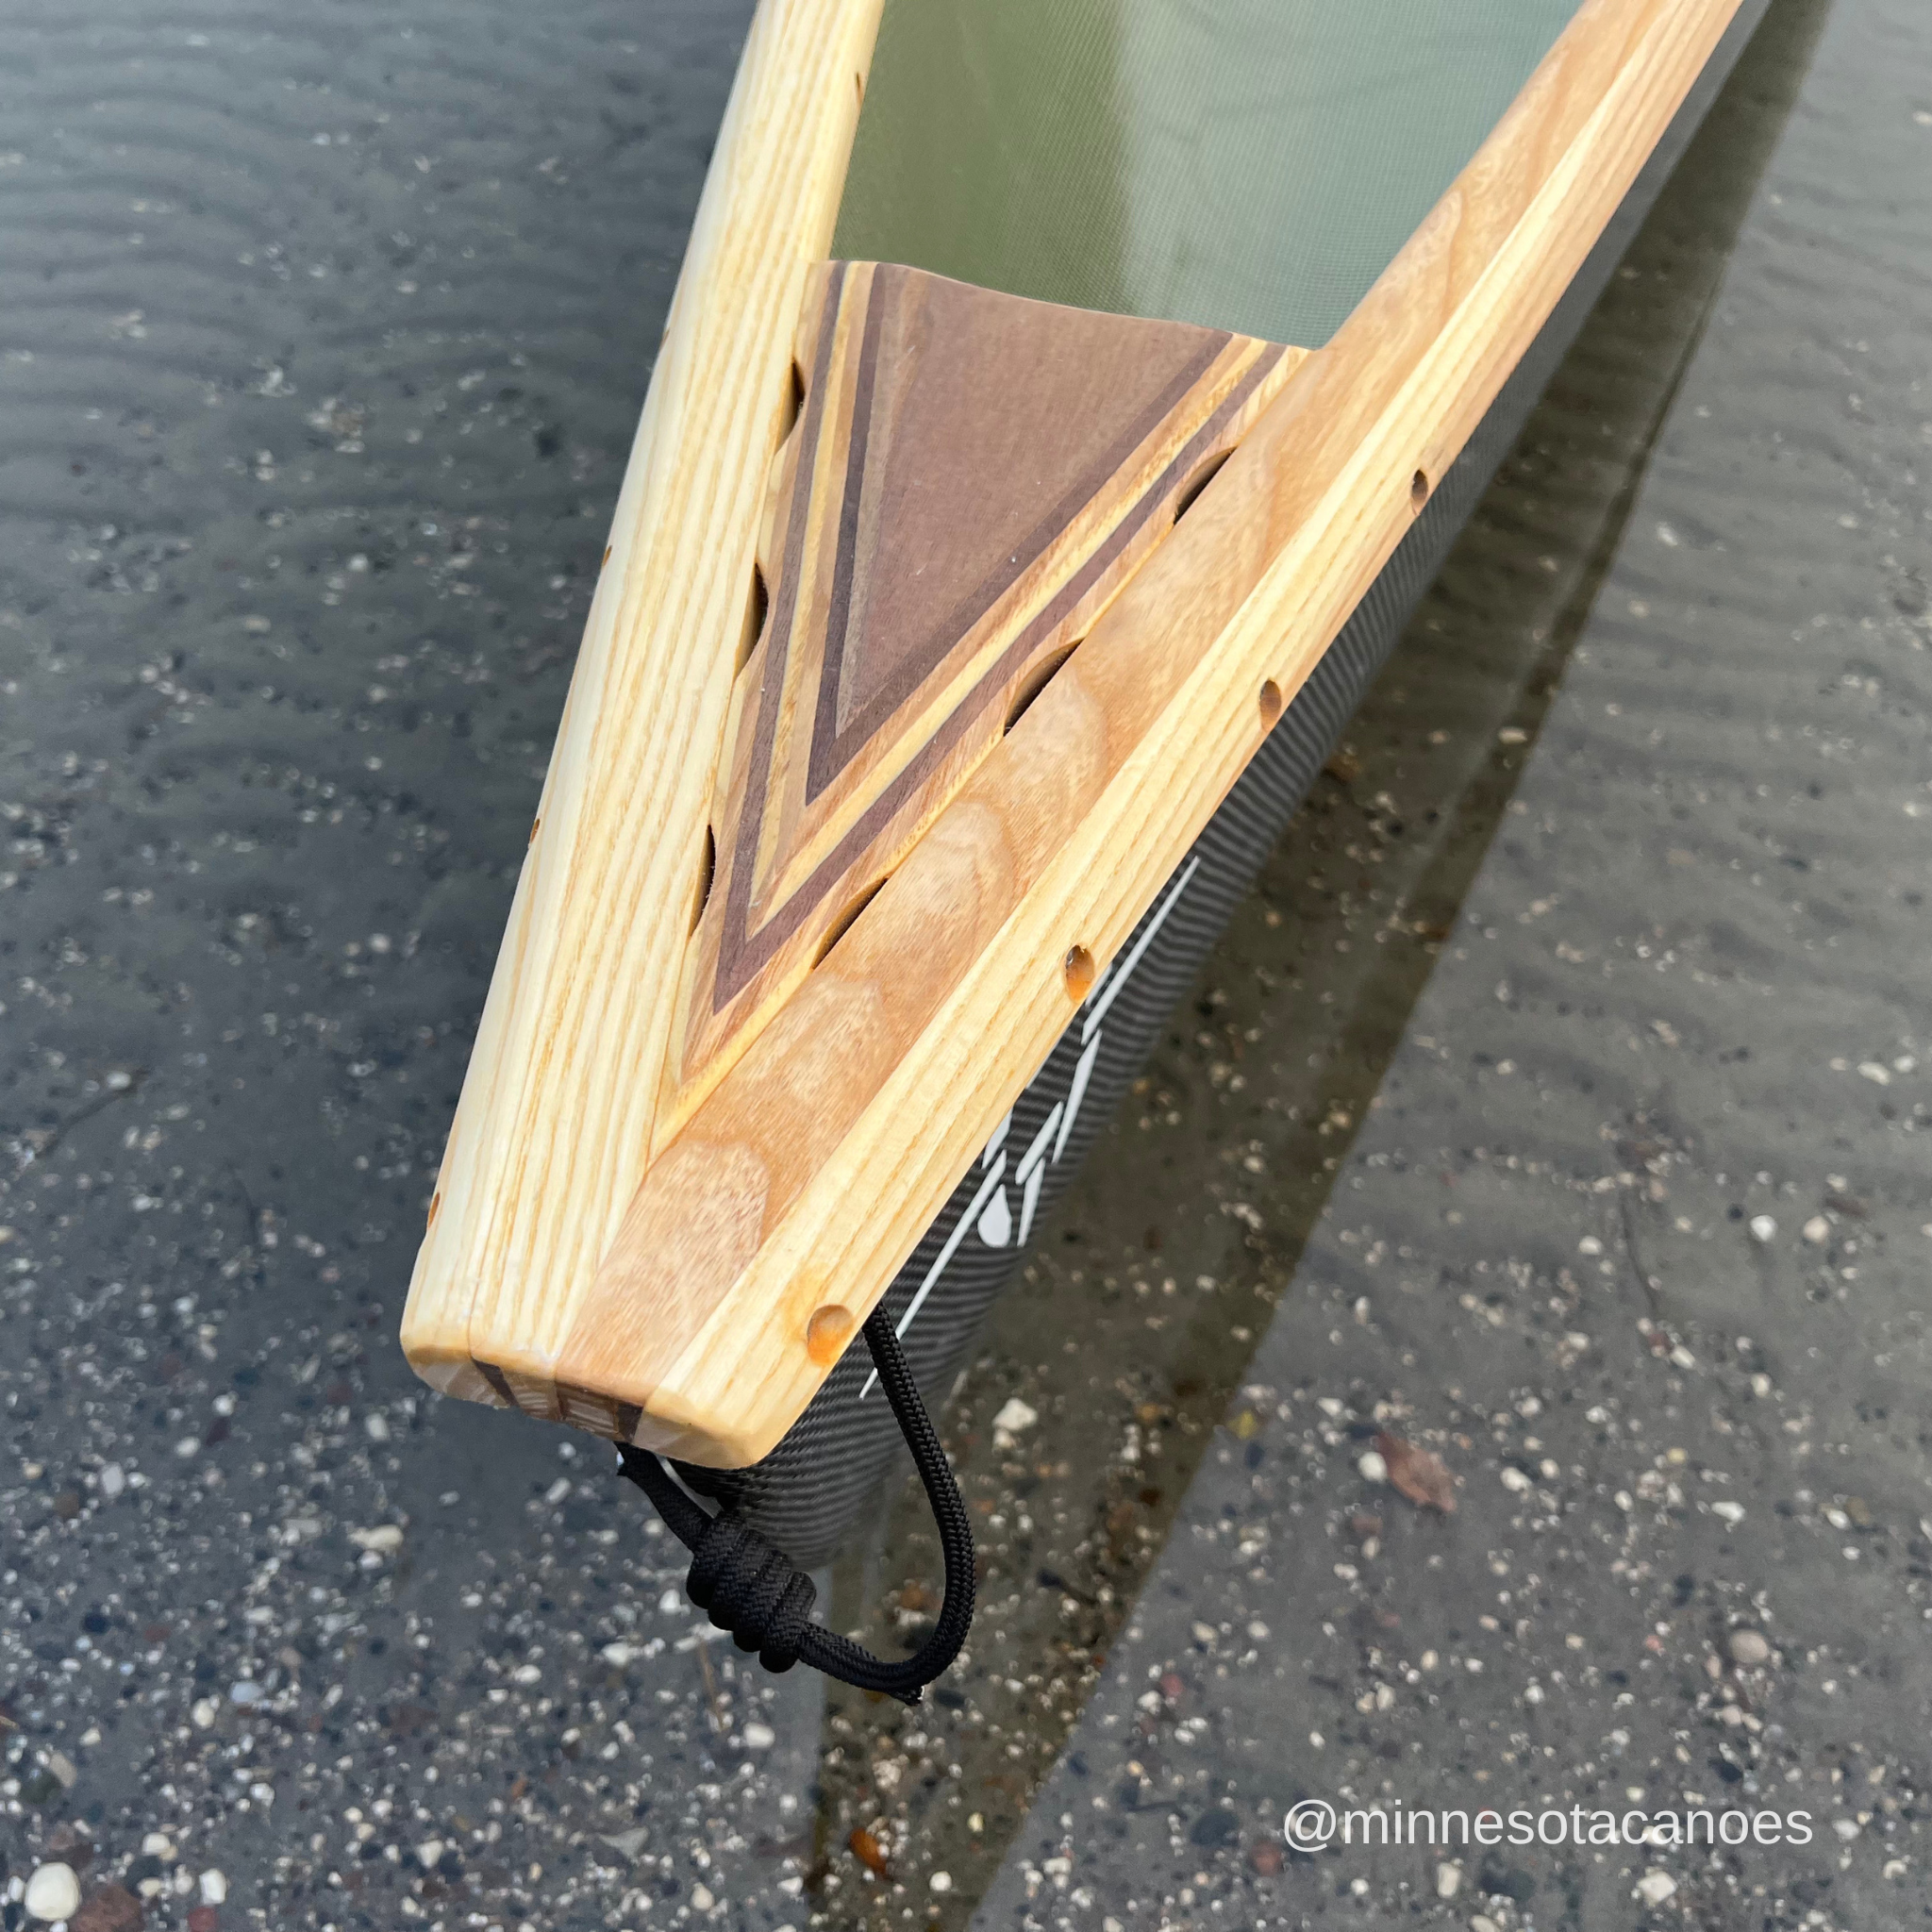 NORTHWIND SOLO (15' 6") IXP w/Wood Trim Solo Northstar Canoe